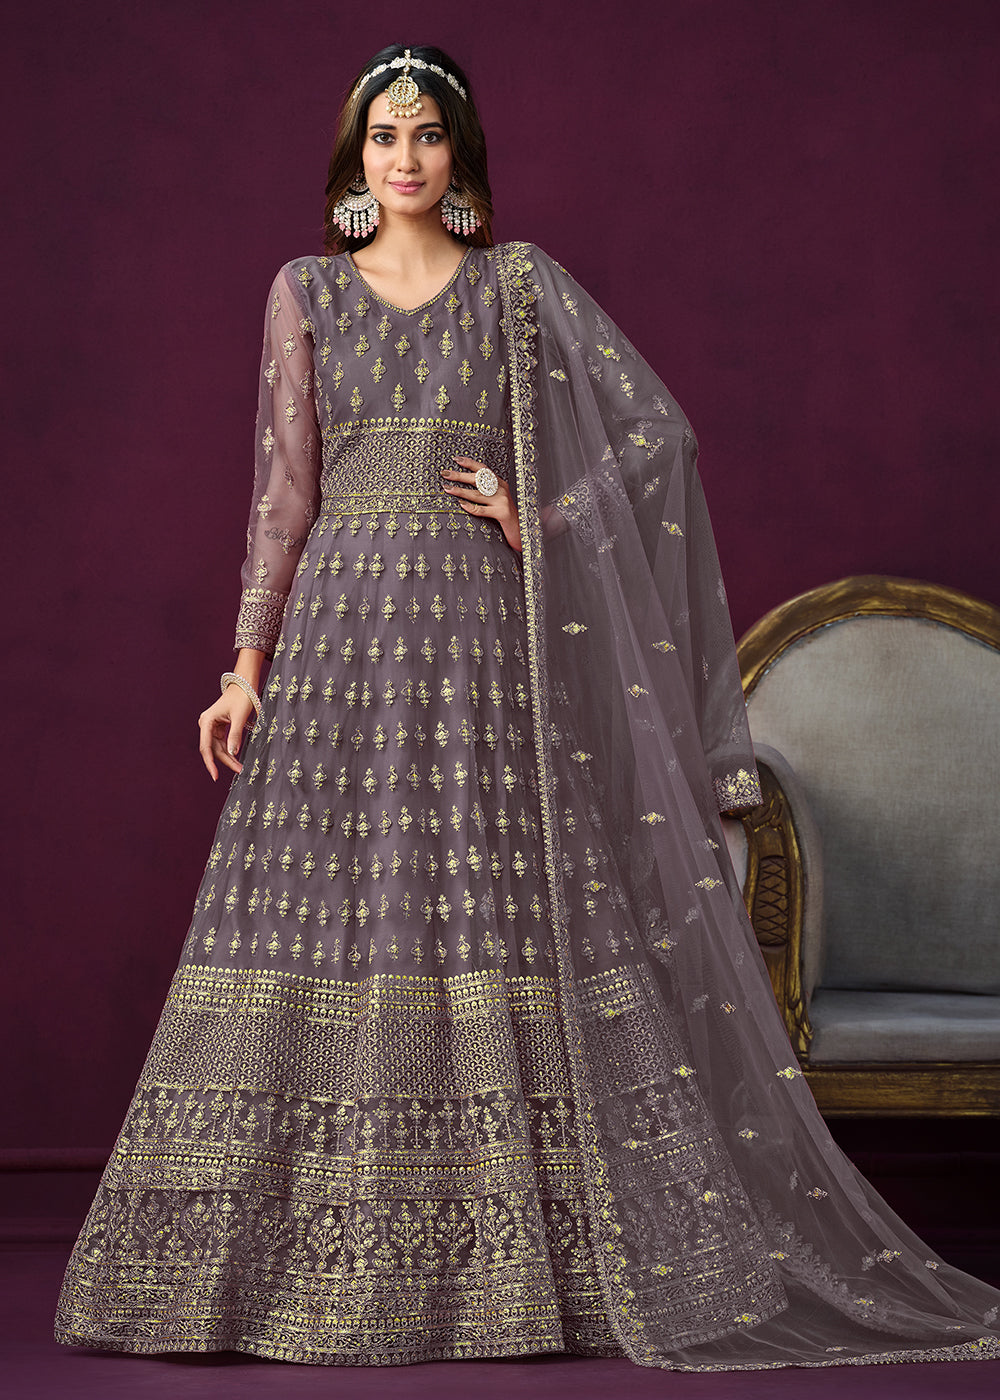 Buy Now Floor Length Purple Sequins Embroidered Wedding Anarkali Suit Online in USA, UK, Australia, New Zealand, Canada & Worldwide at Empress Clothing. 